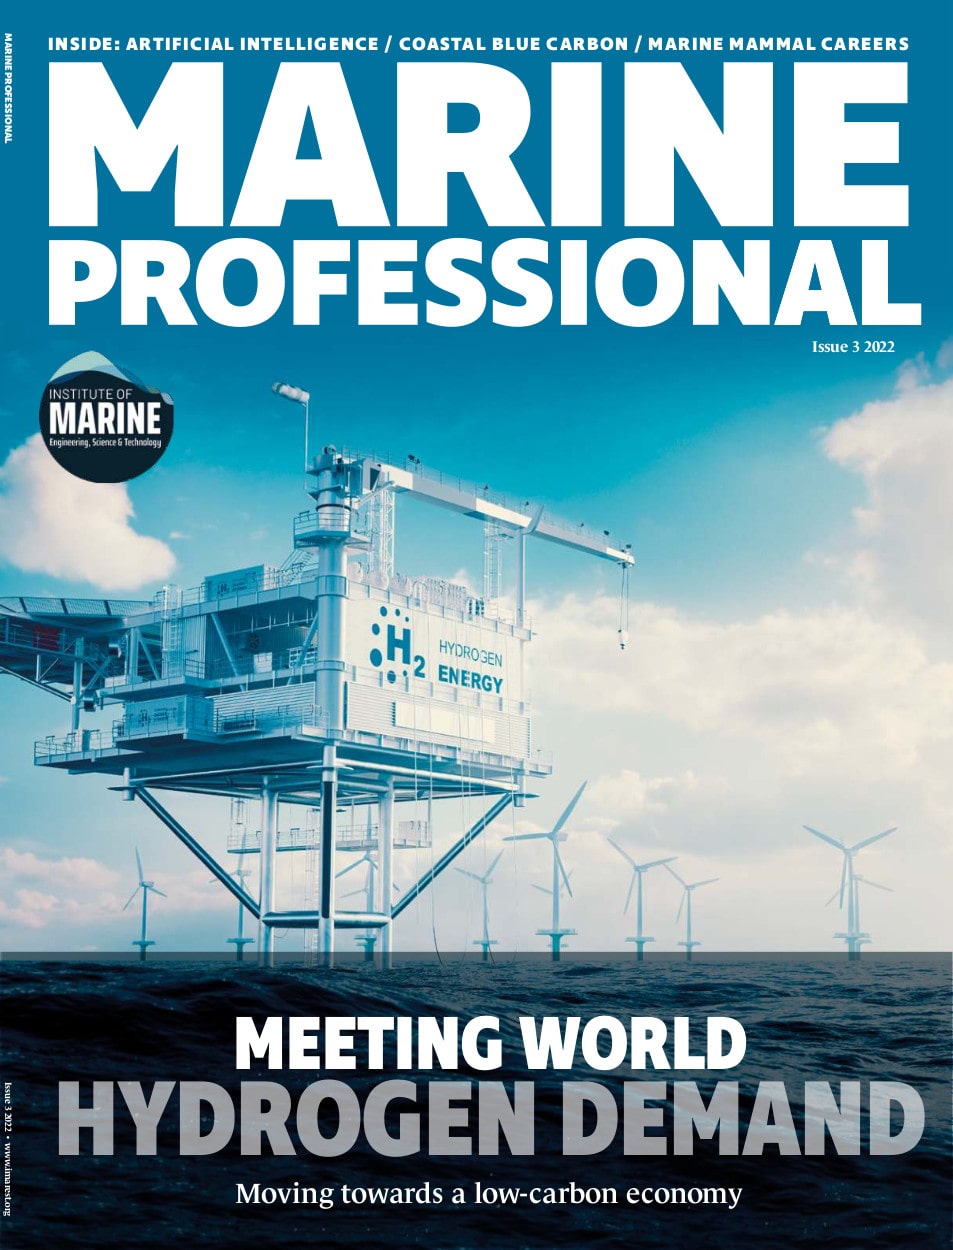 IMAREST Maritime Professional Engineering Ethics